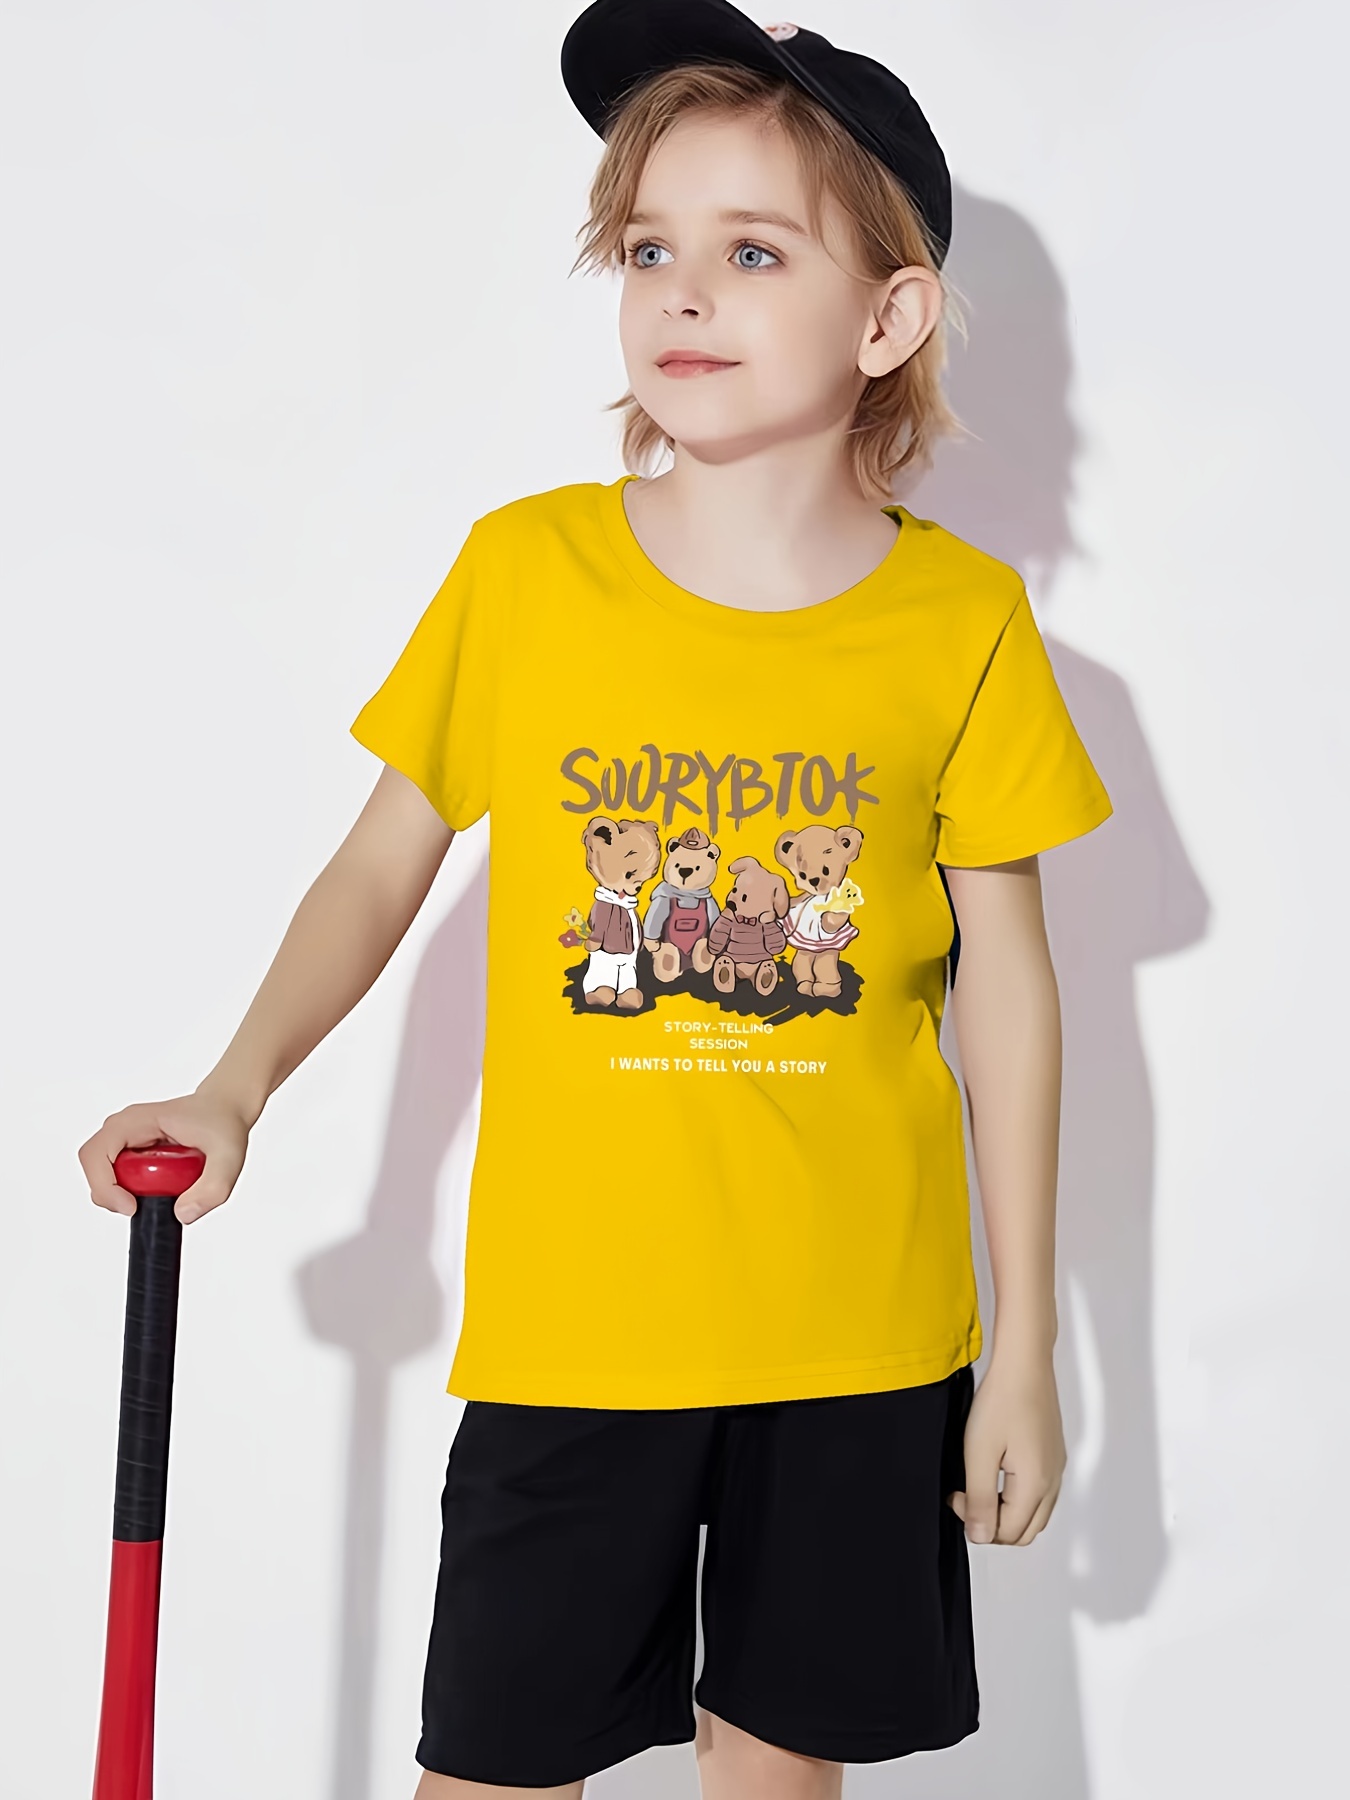 2pcs Kid Boy Letter Animal Bear Print Short-sleeve Yellow Tee and Black Shorts Set